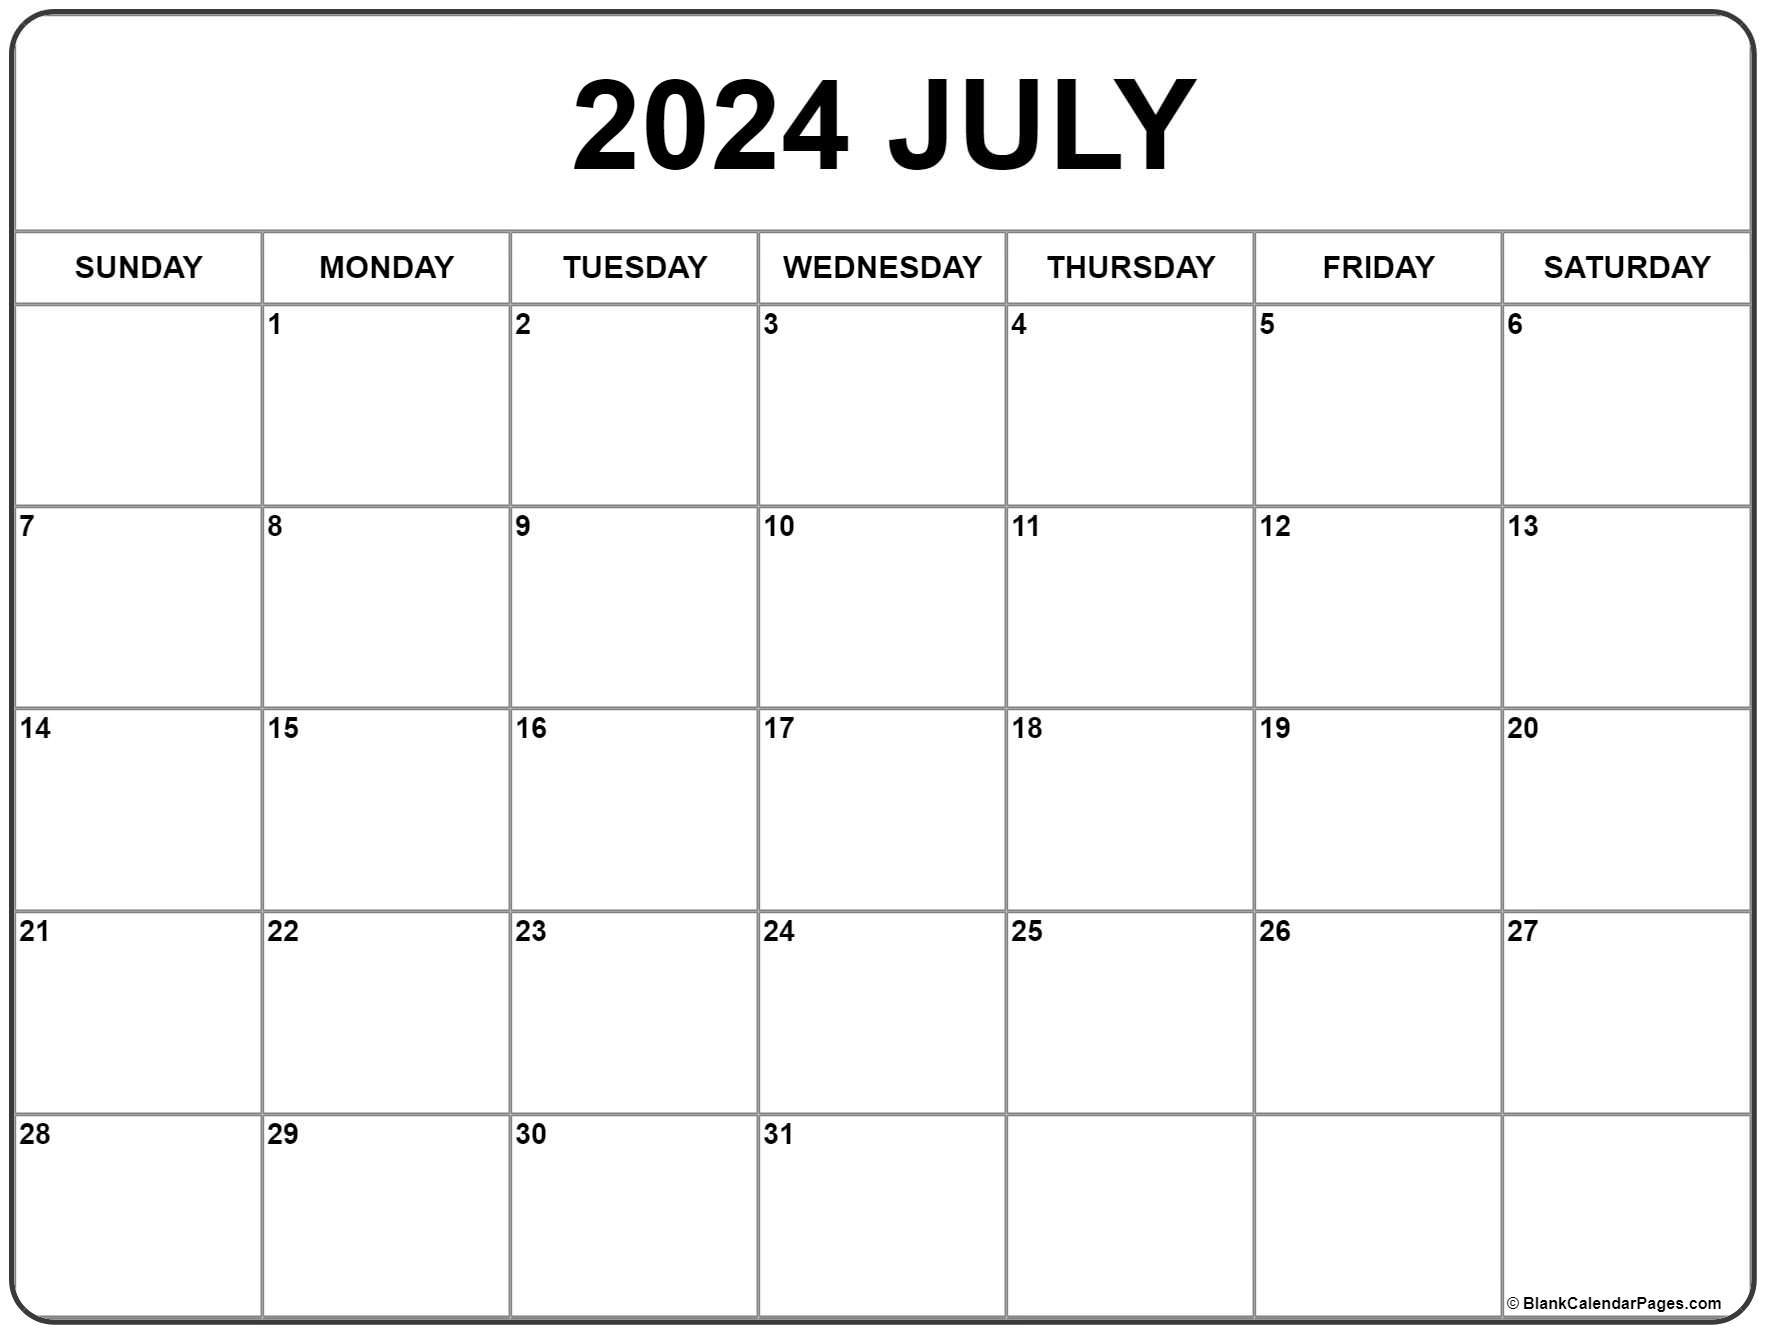 July 2024 Calendar | Free Printable Calendar for Free July 2024 Calendar